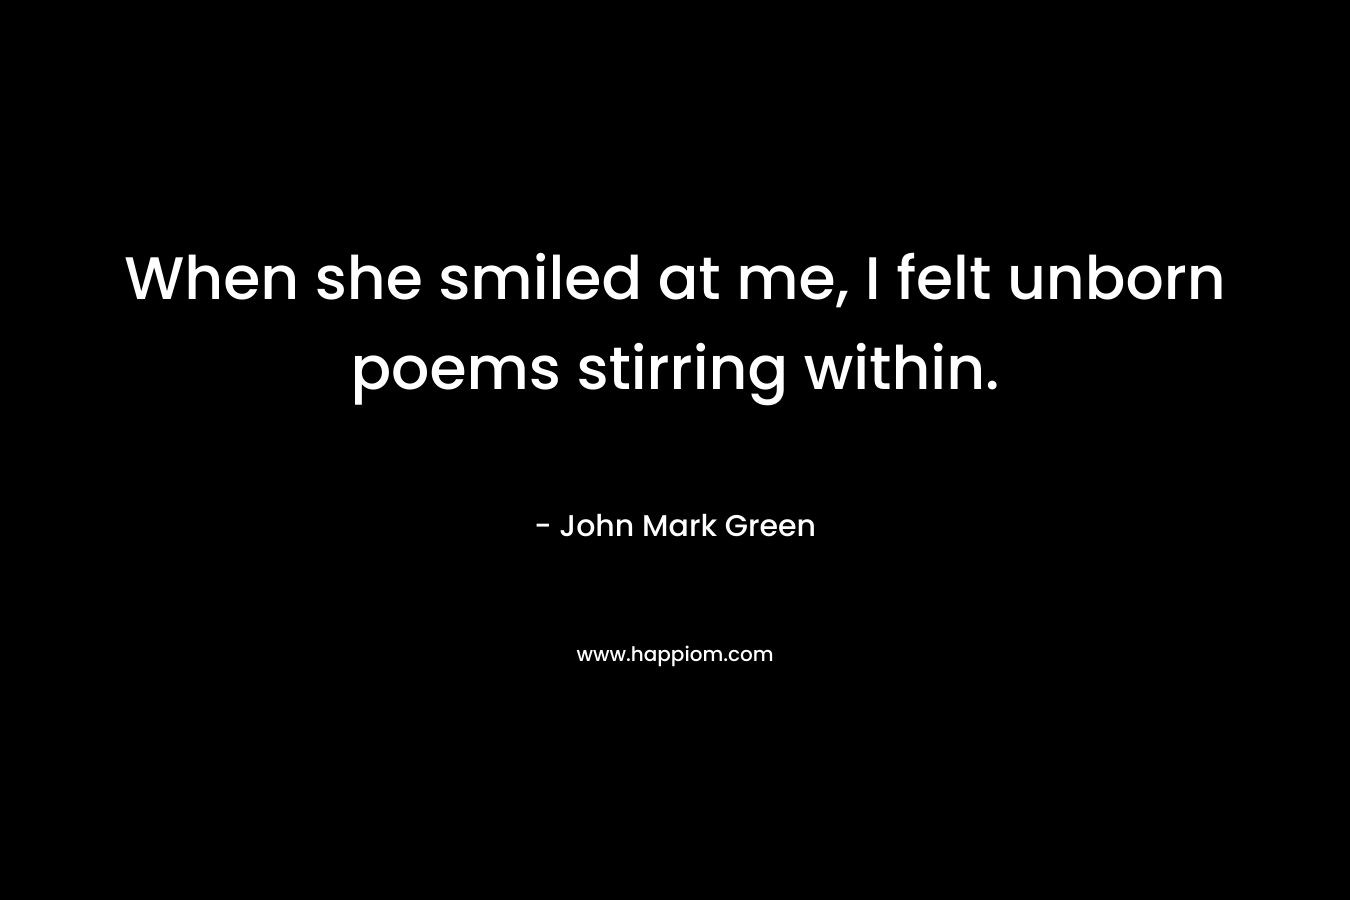 When she smiled at me, I felt unborn poems stirring within.